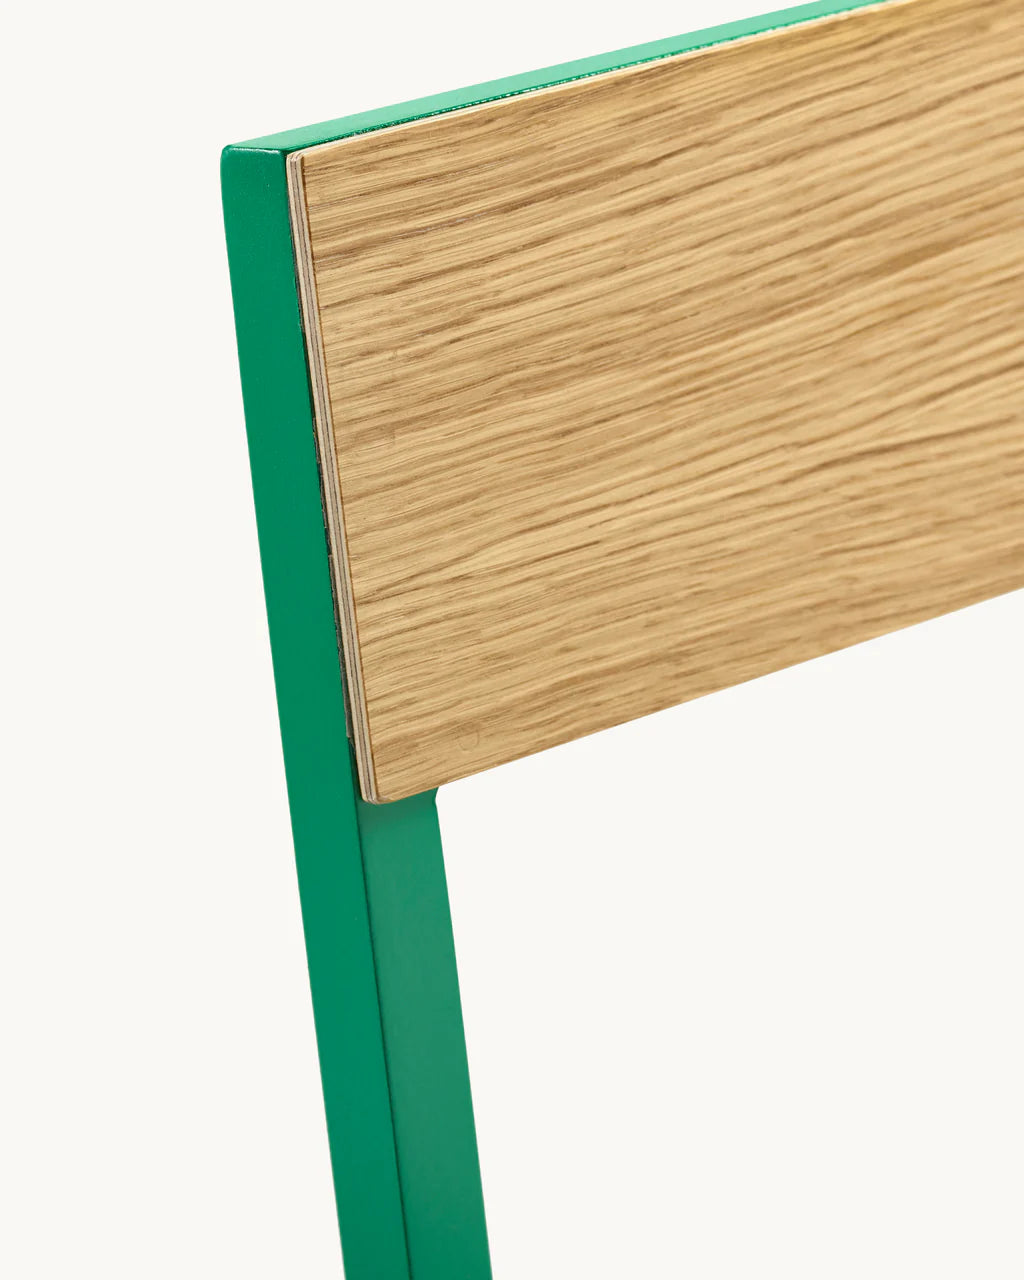 Valerie Alu Chair Wood Green Frame